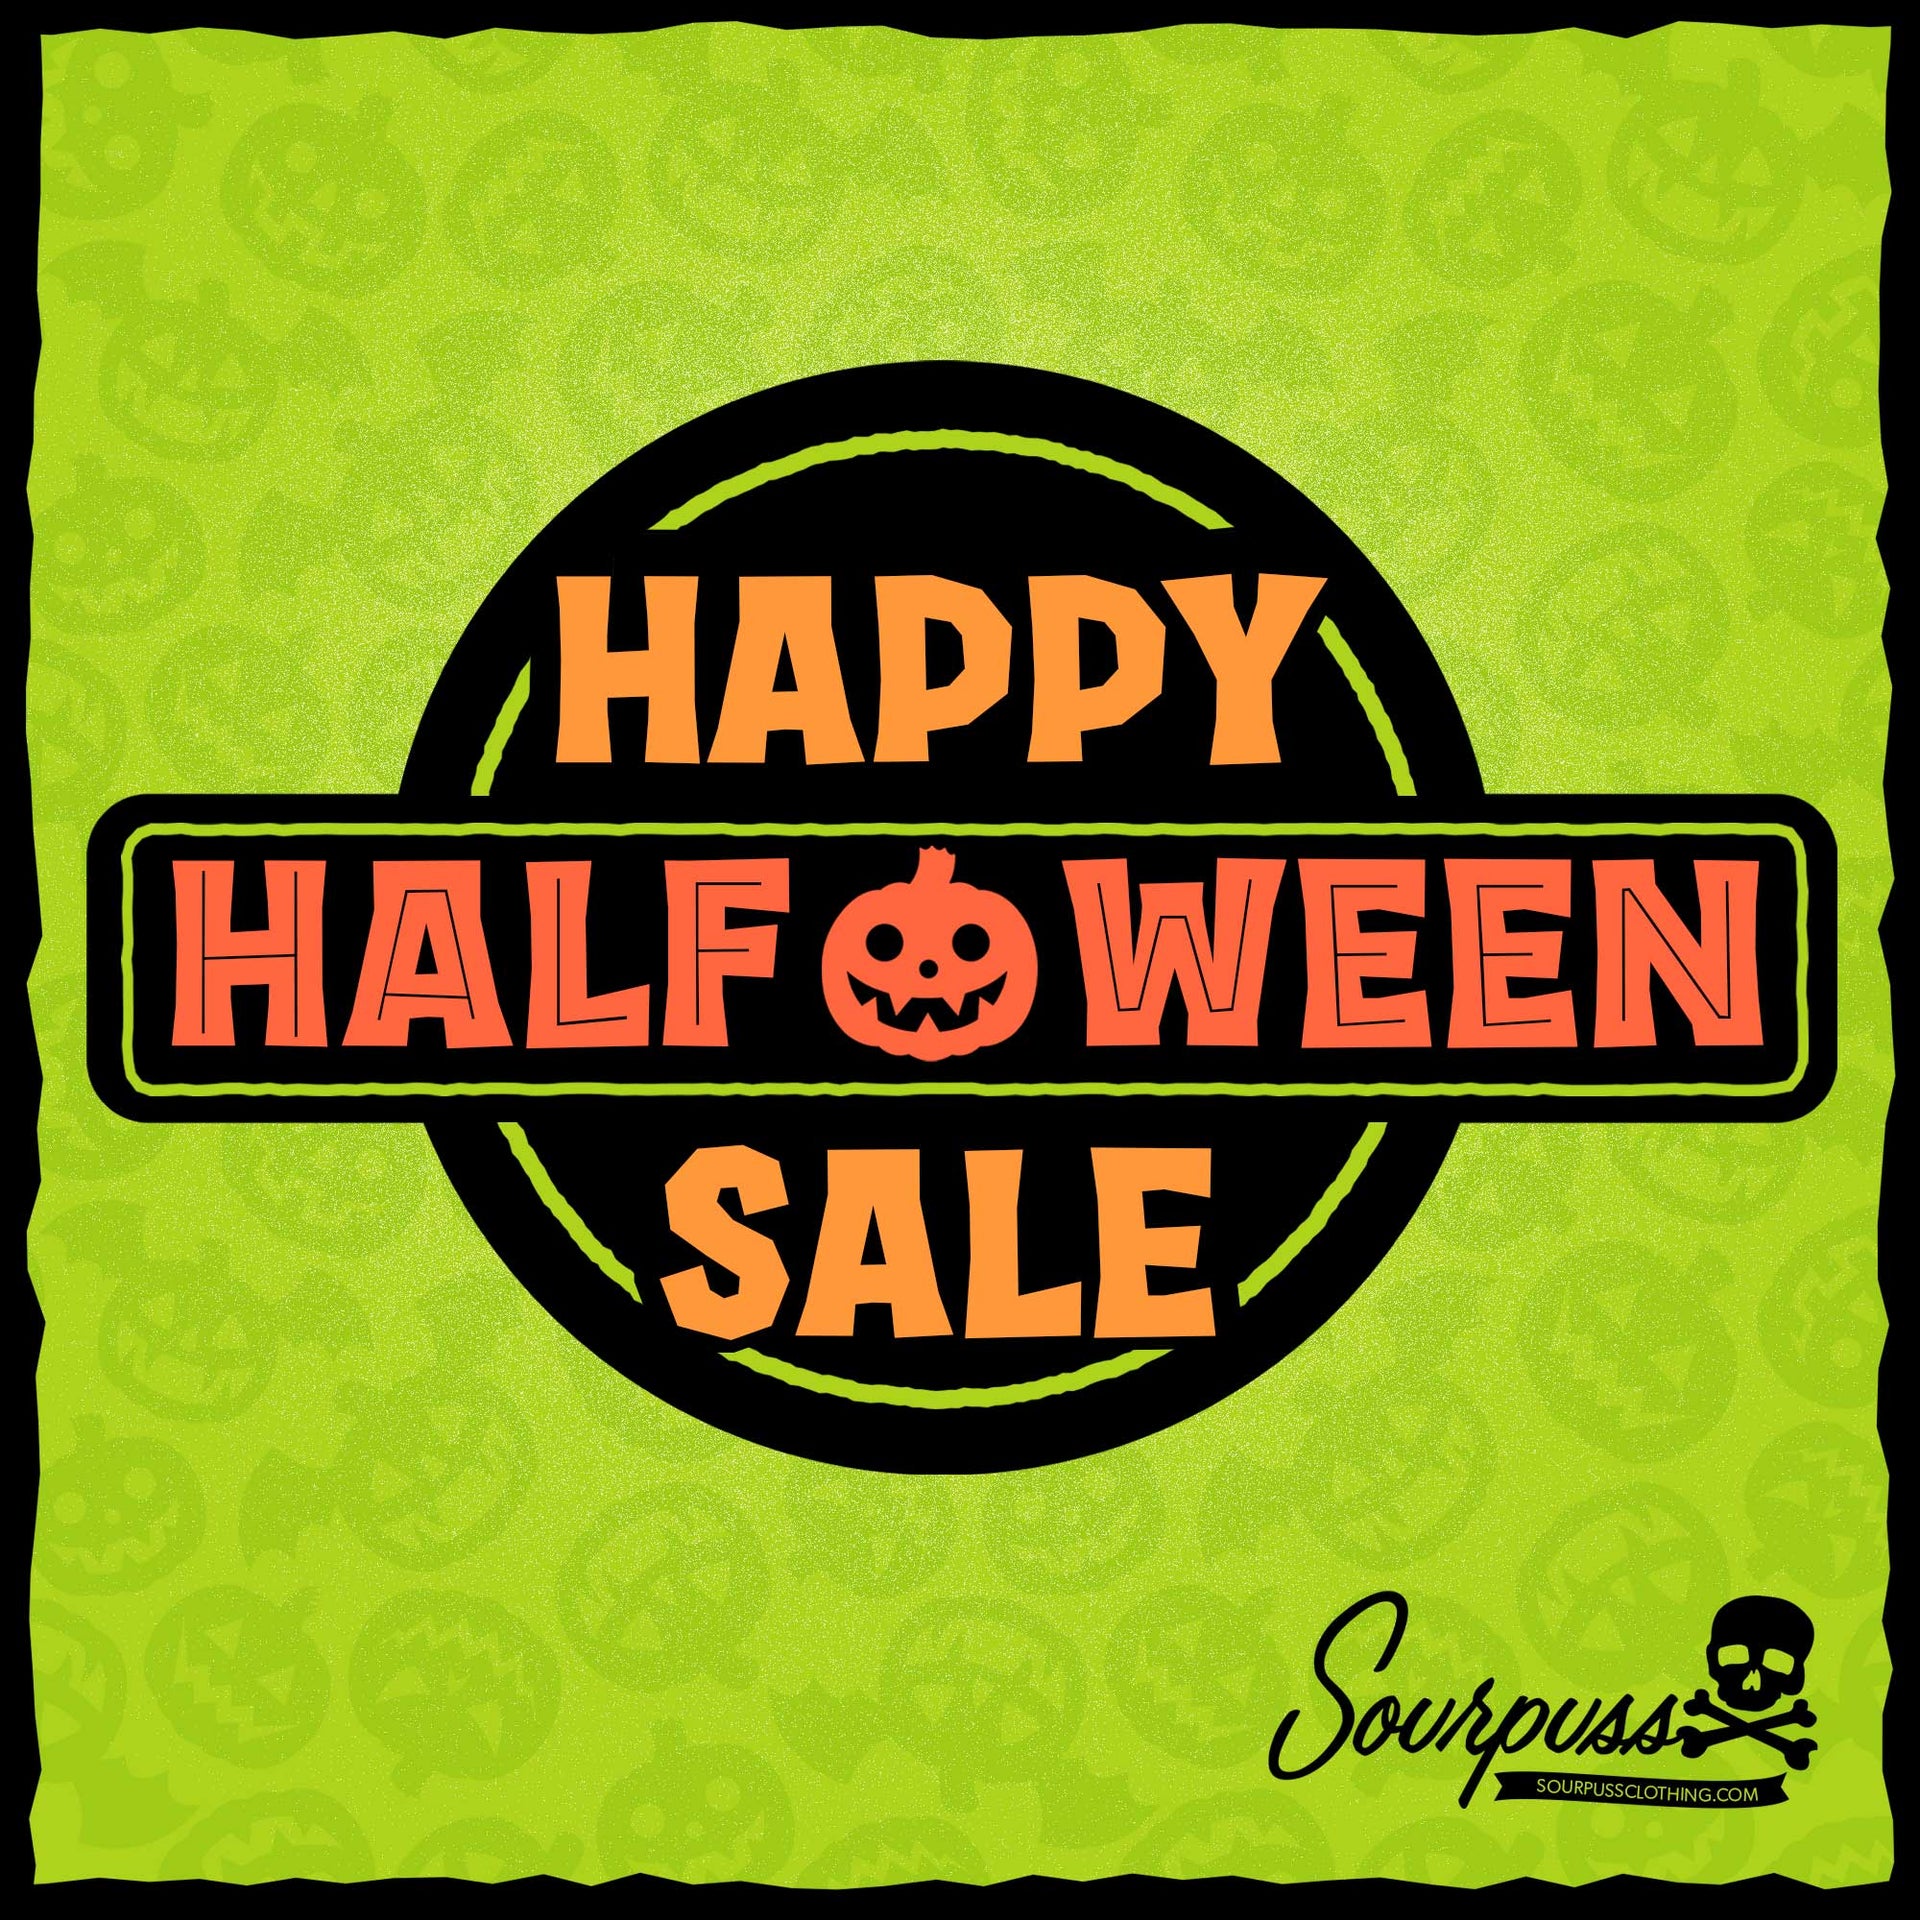 Happy Half-O-Ween Sale!